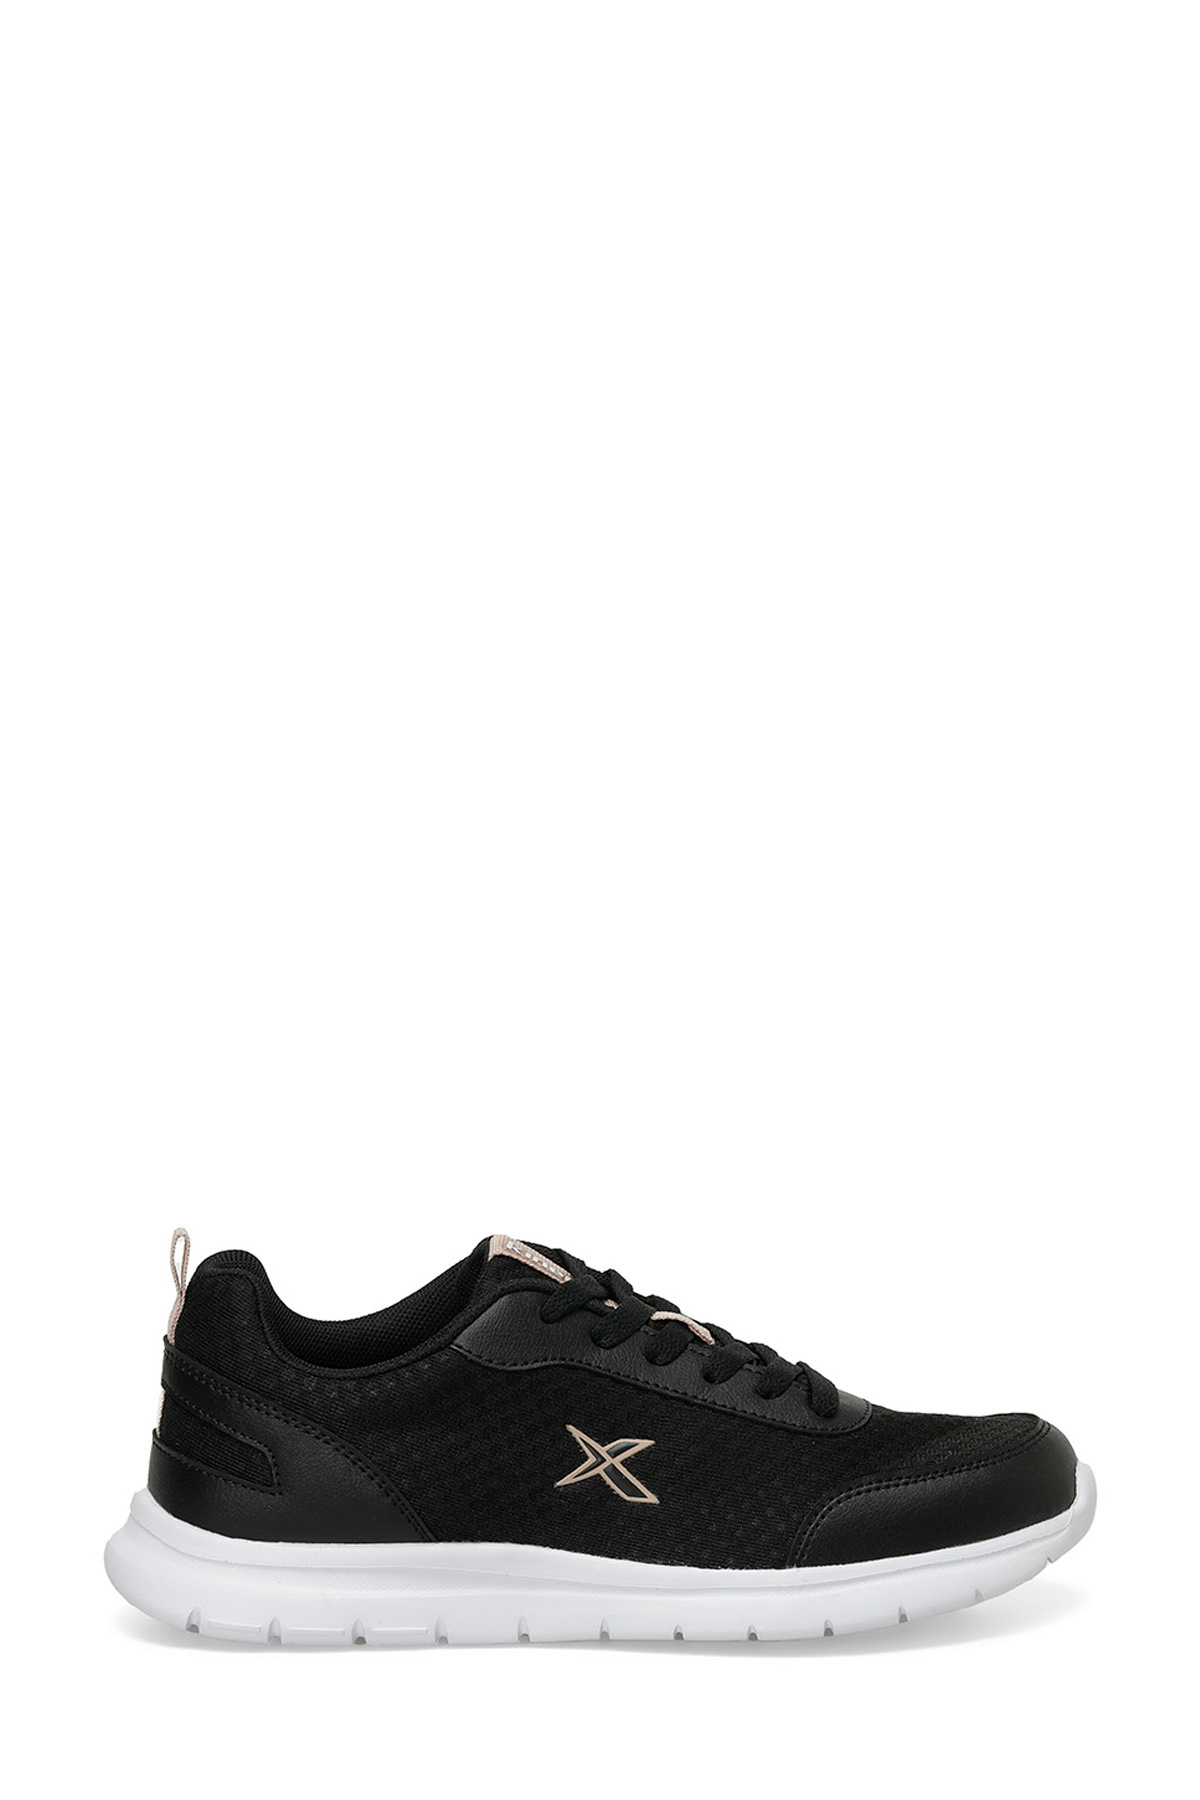 KINETIX LENA TX W 4FX Women's Black Running Shoe